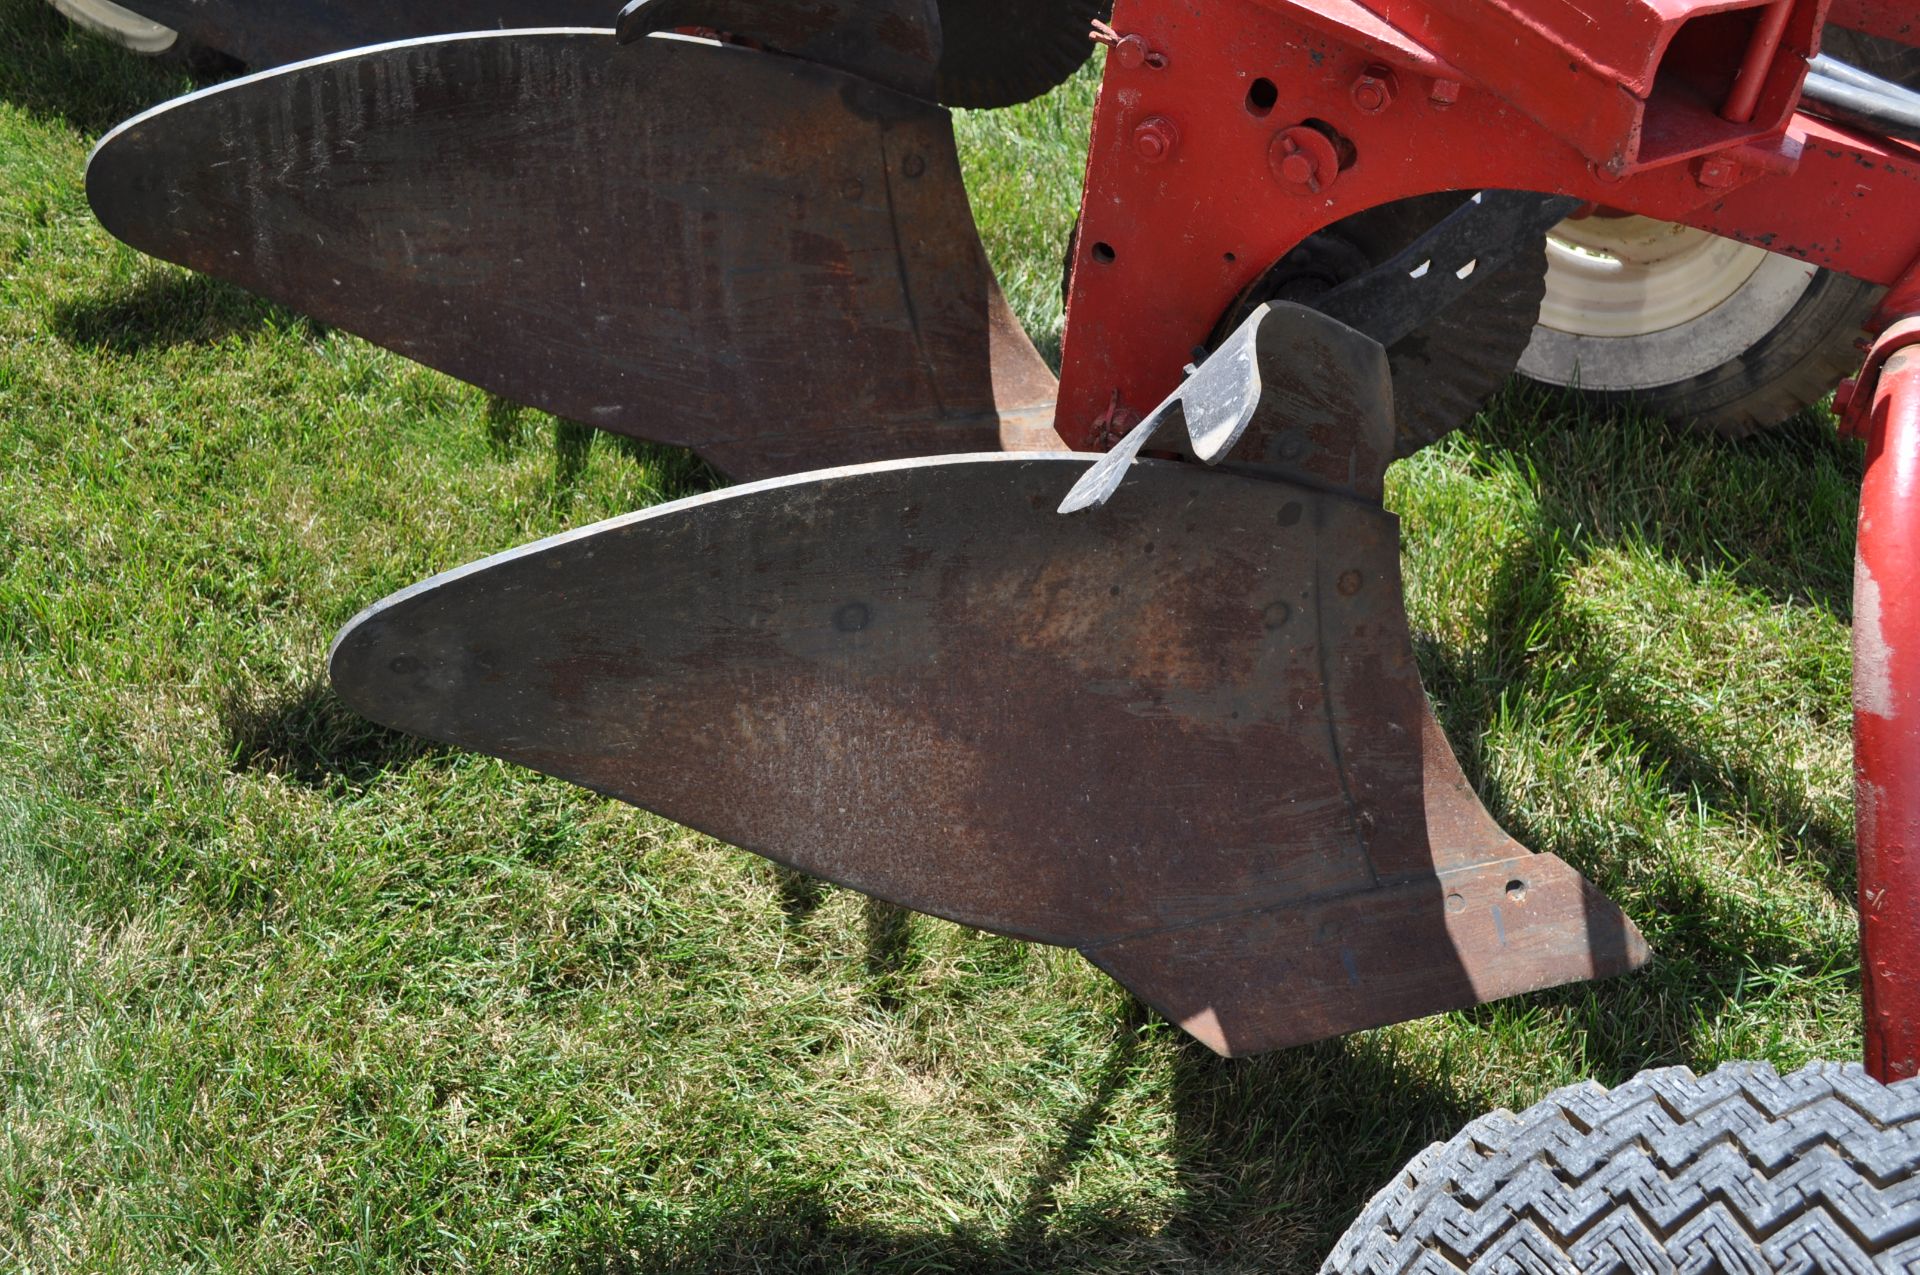 3 btm x 14” International 60 moldboard plow, pull type, hyd lift, tail wheel - Image 8 of 10